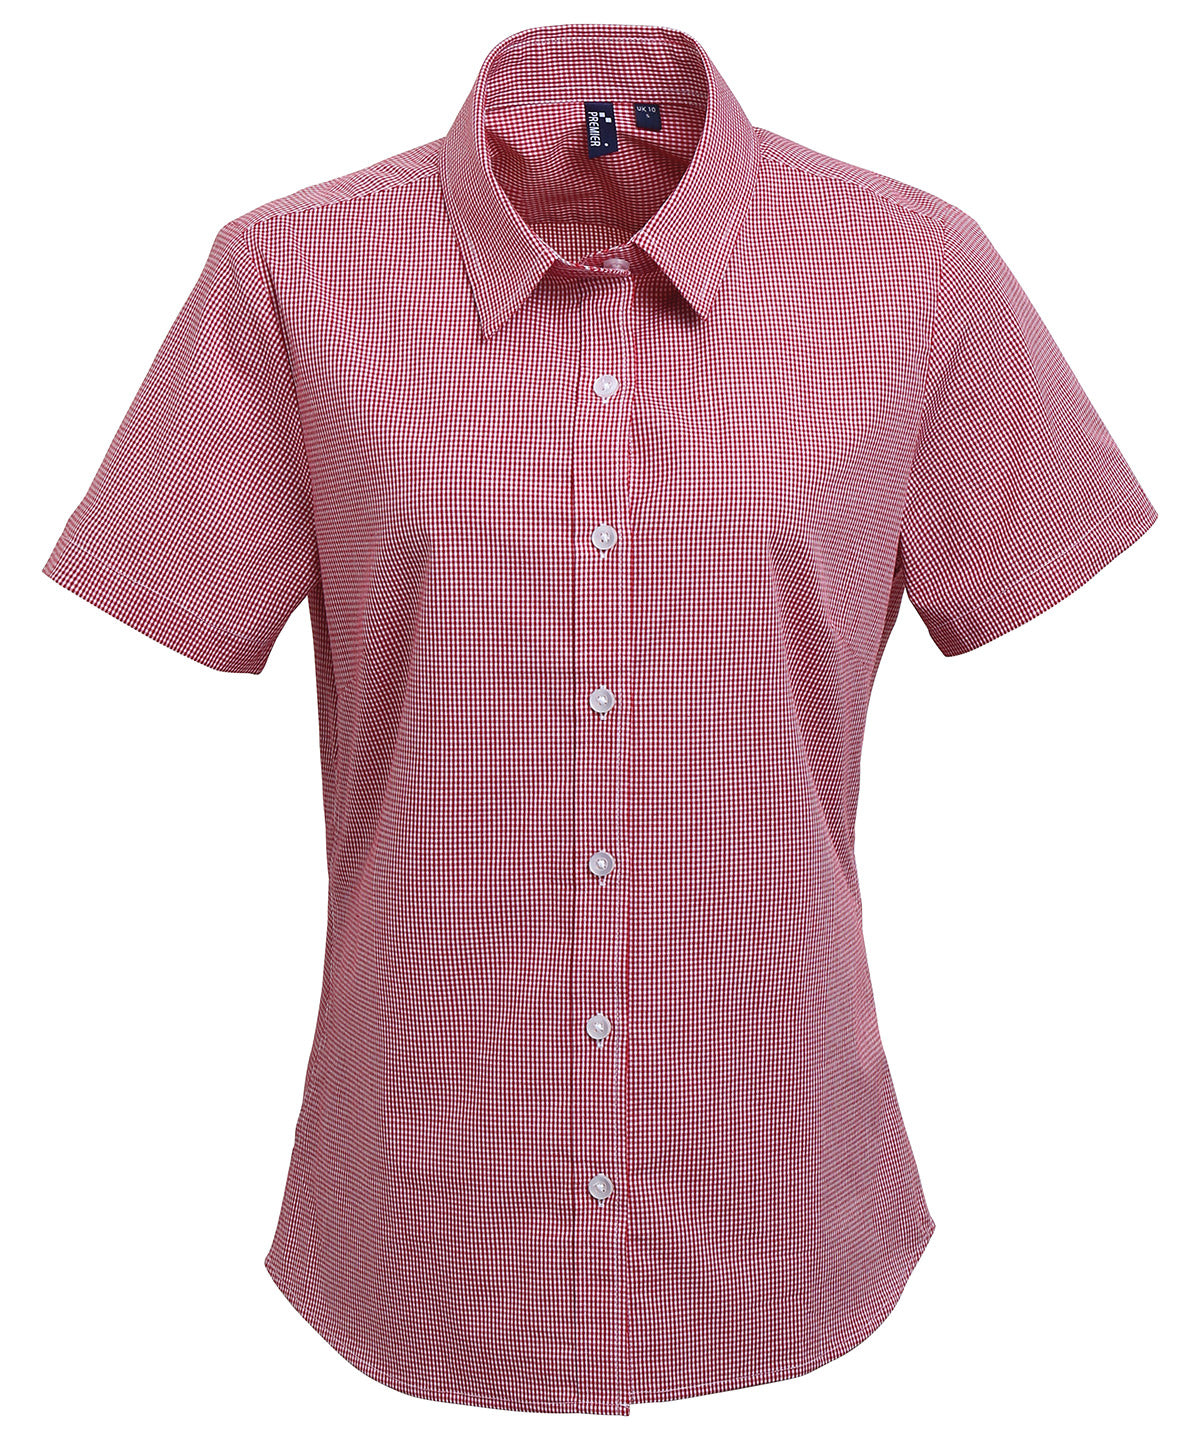 Bolir - Women's Microcheck (Gingham) Short Sleeve Cotton Shirt